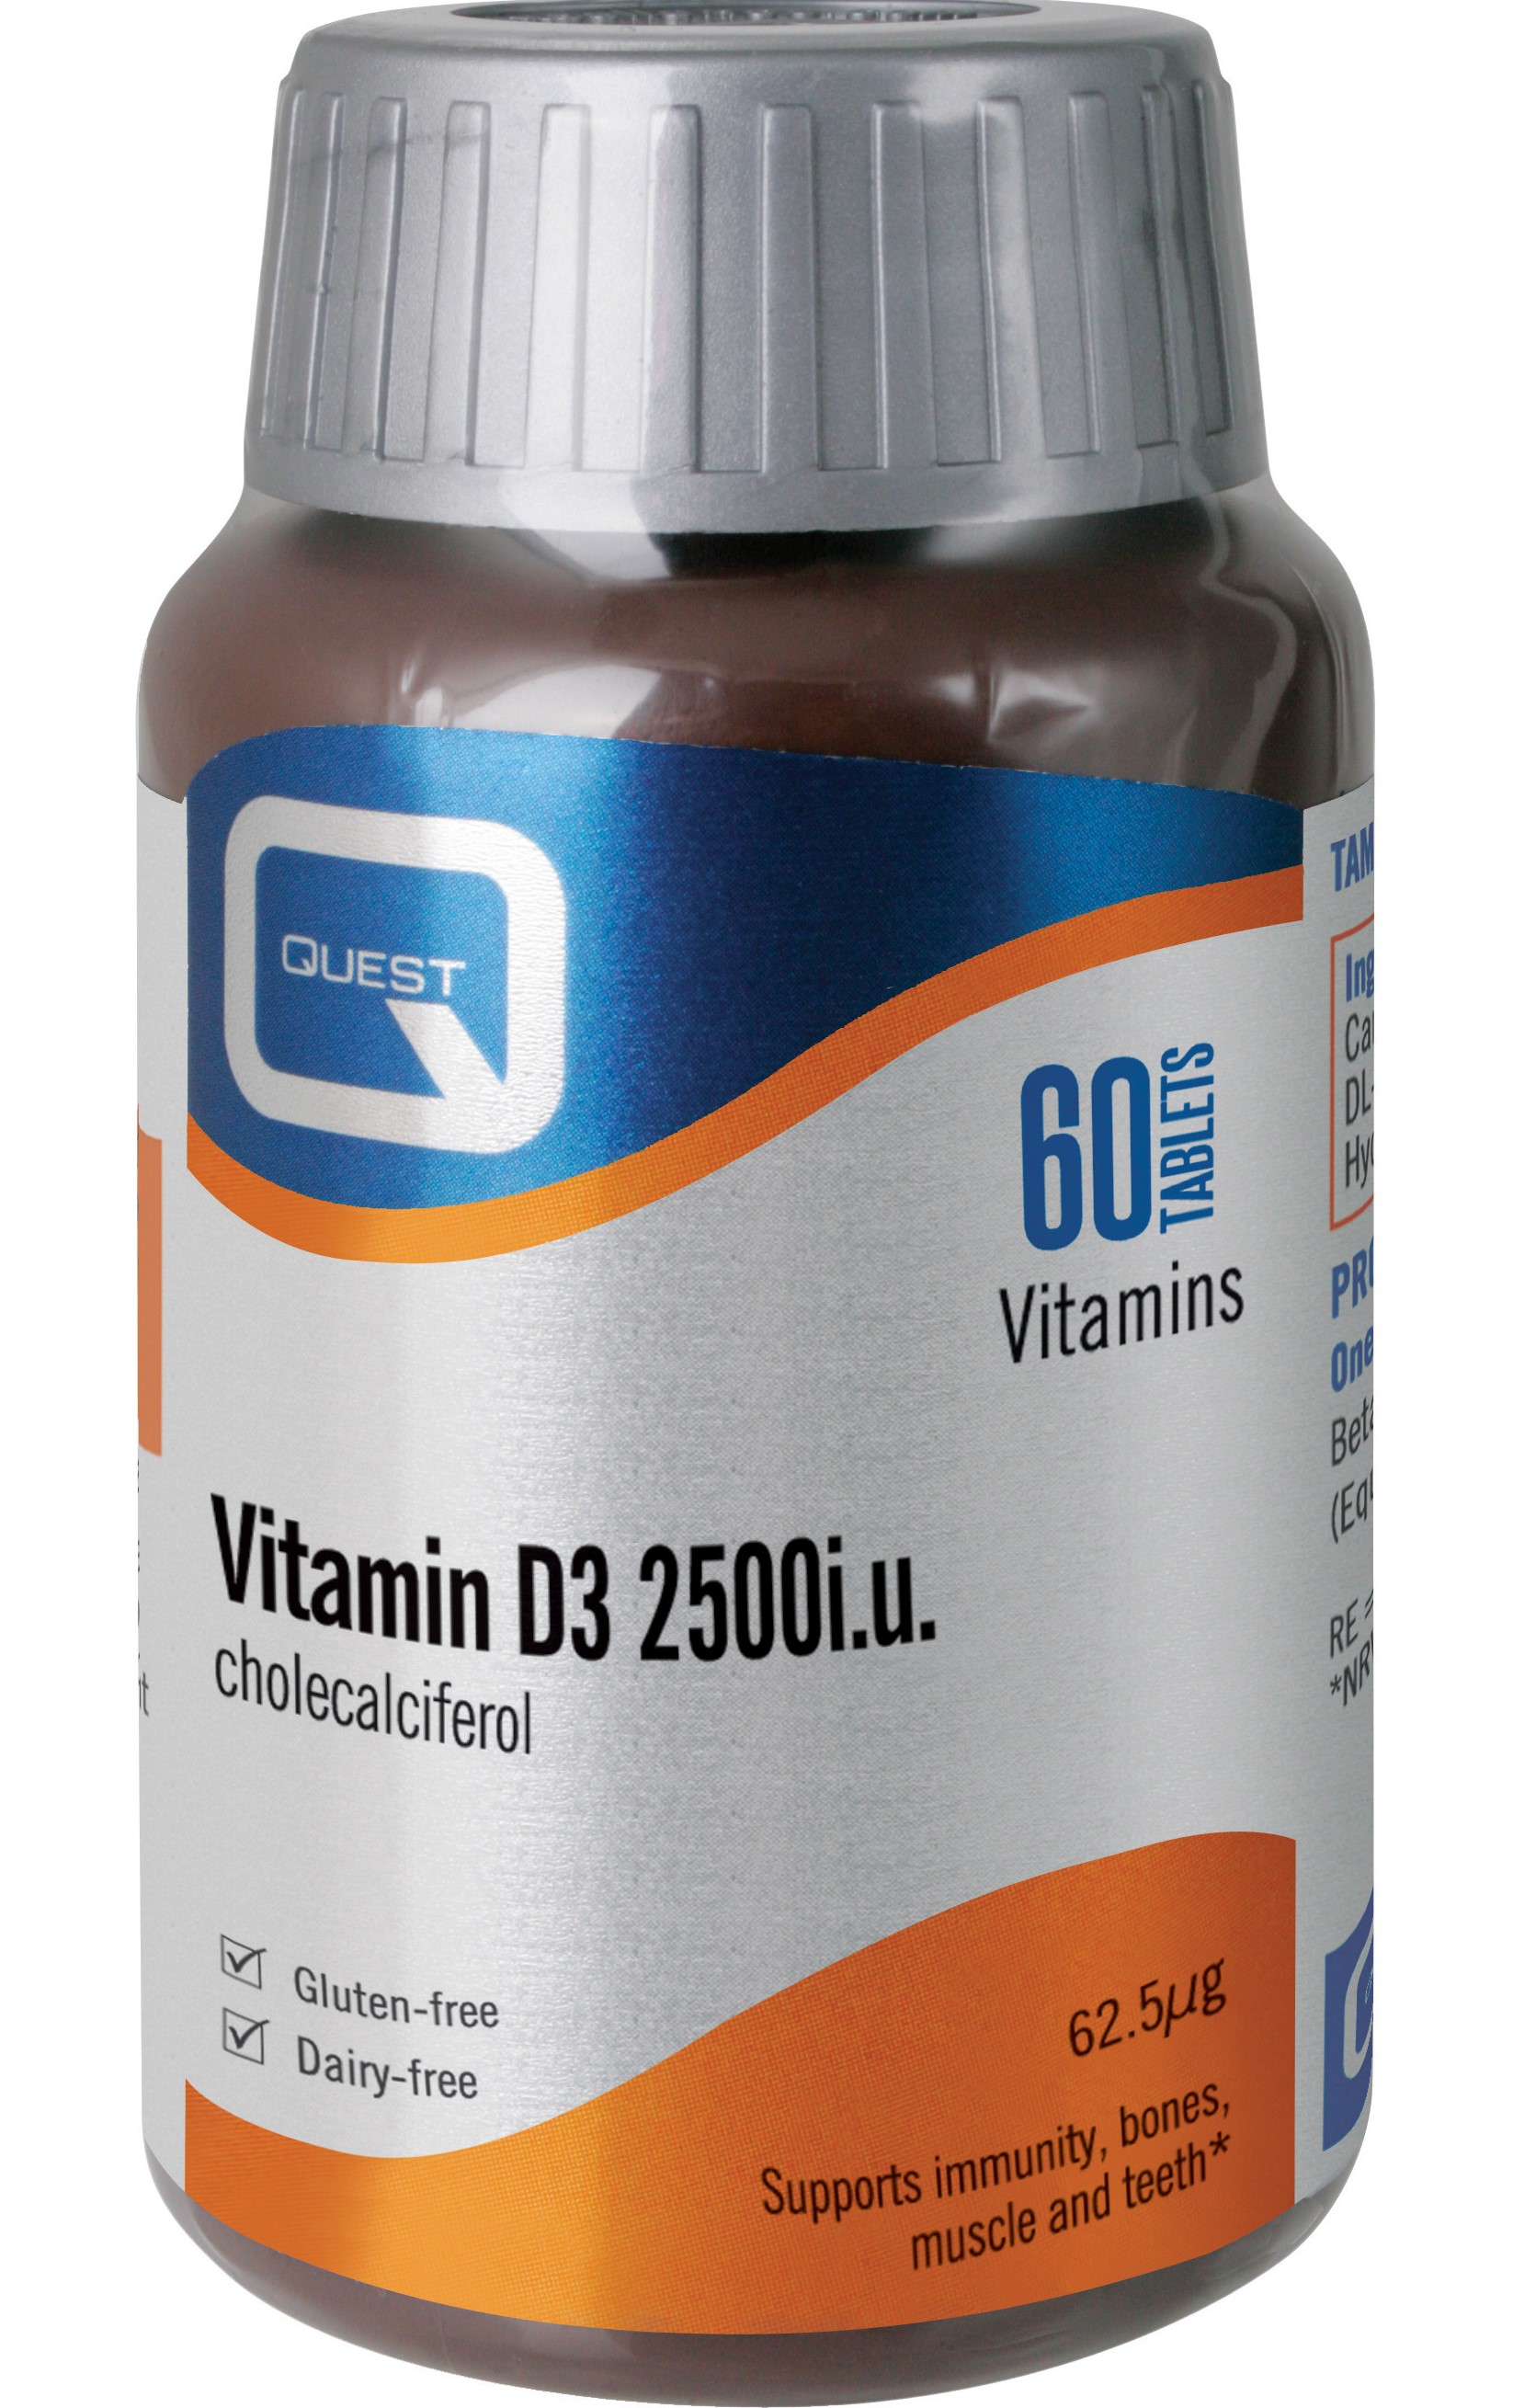 Vitamin D3 2500iu Cholecalciferol 60's